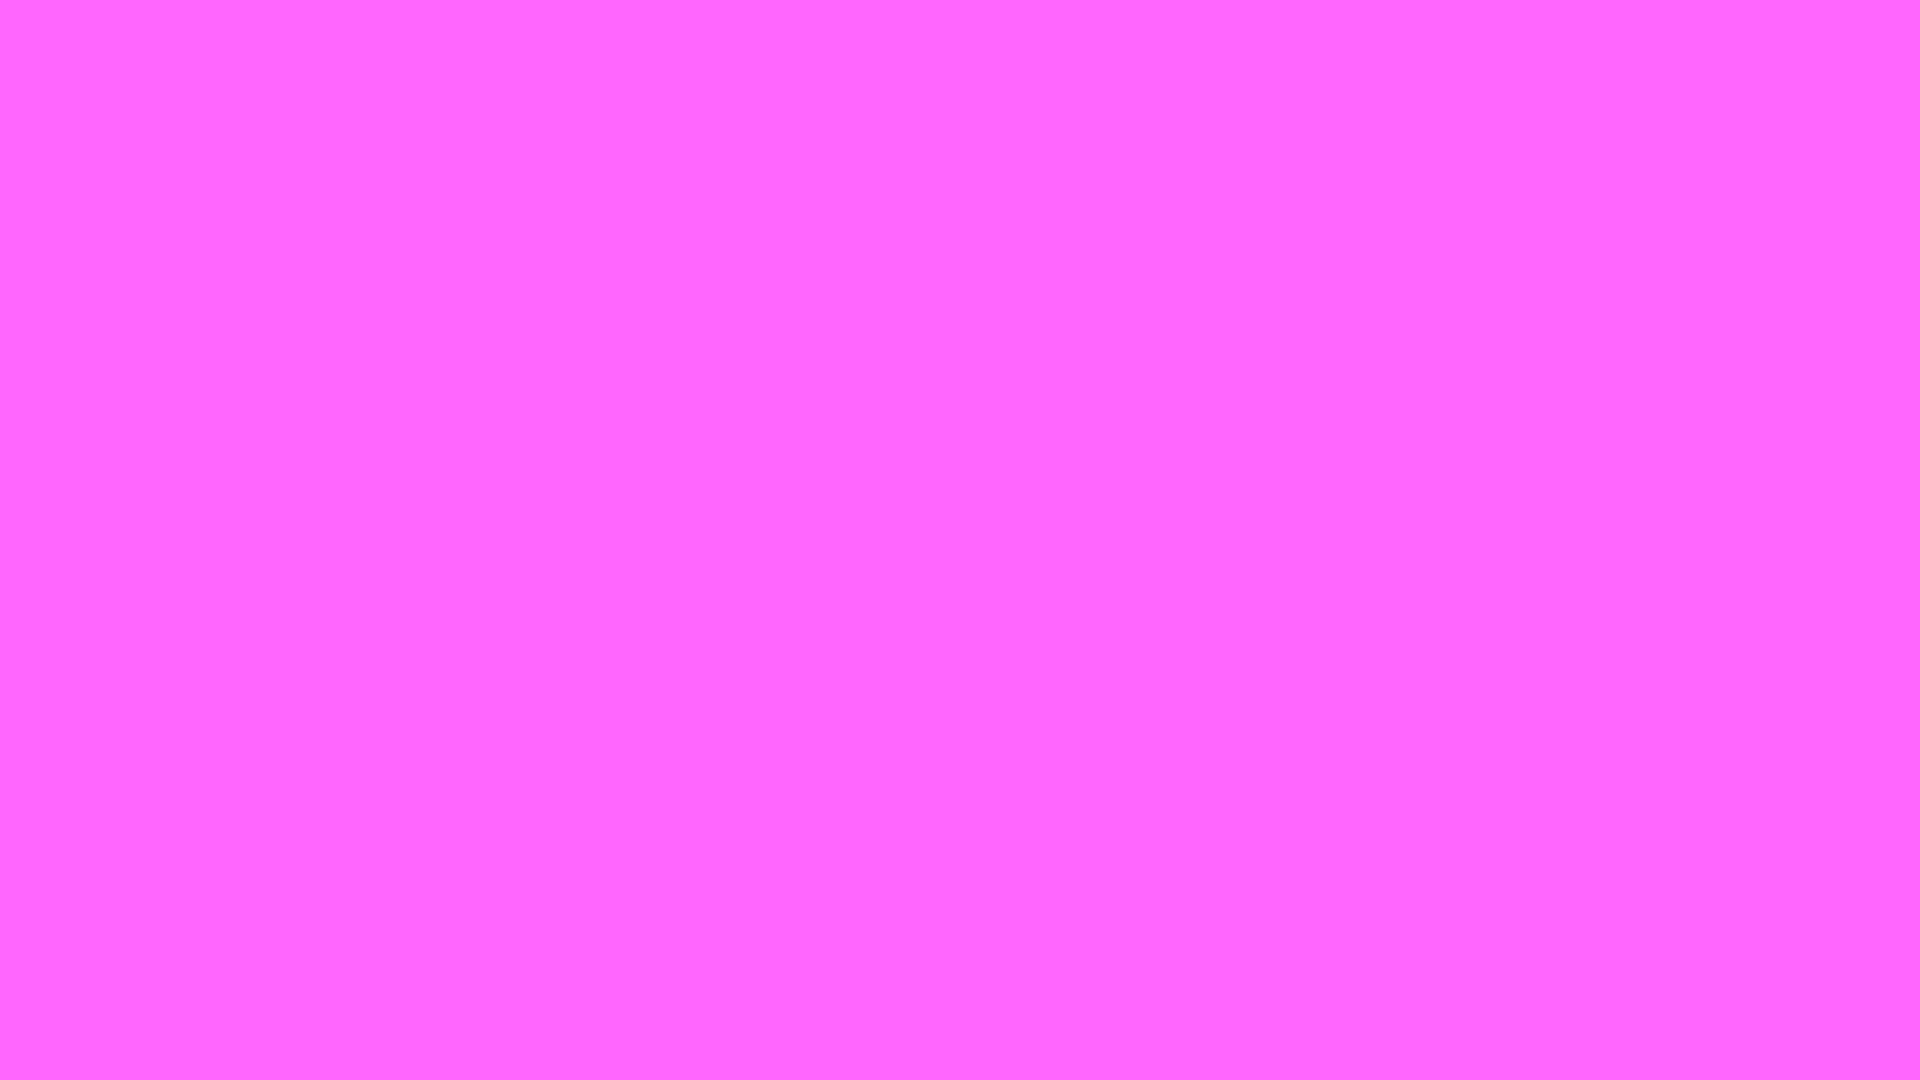 1920x1080 Plain Pink Background